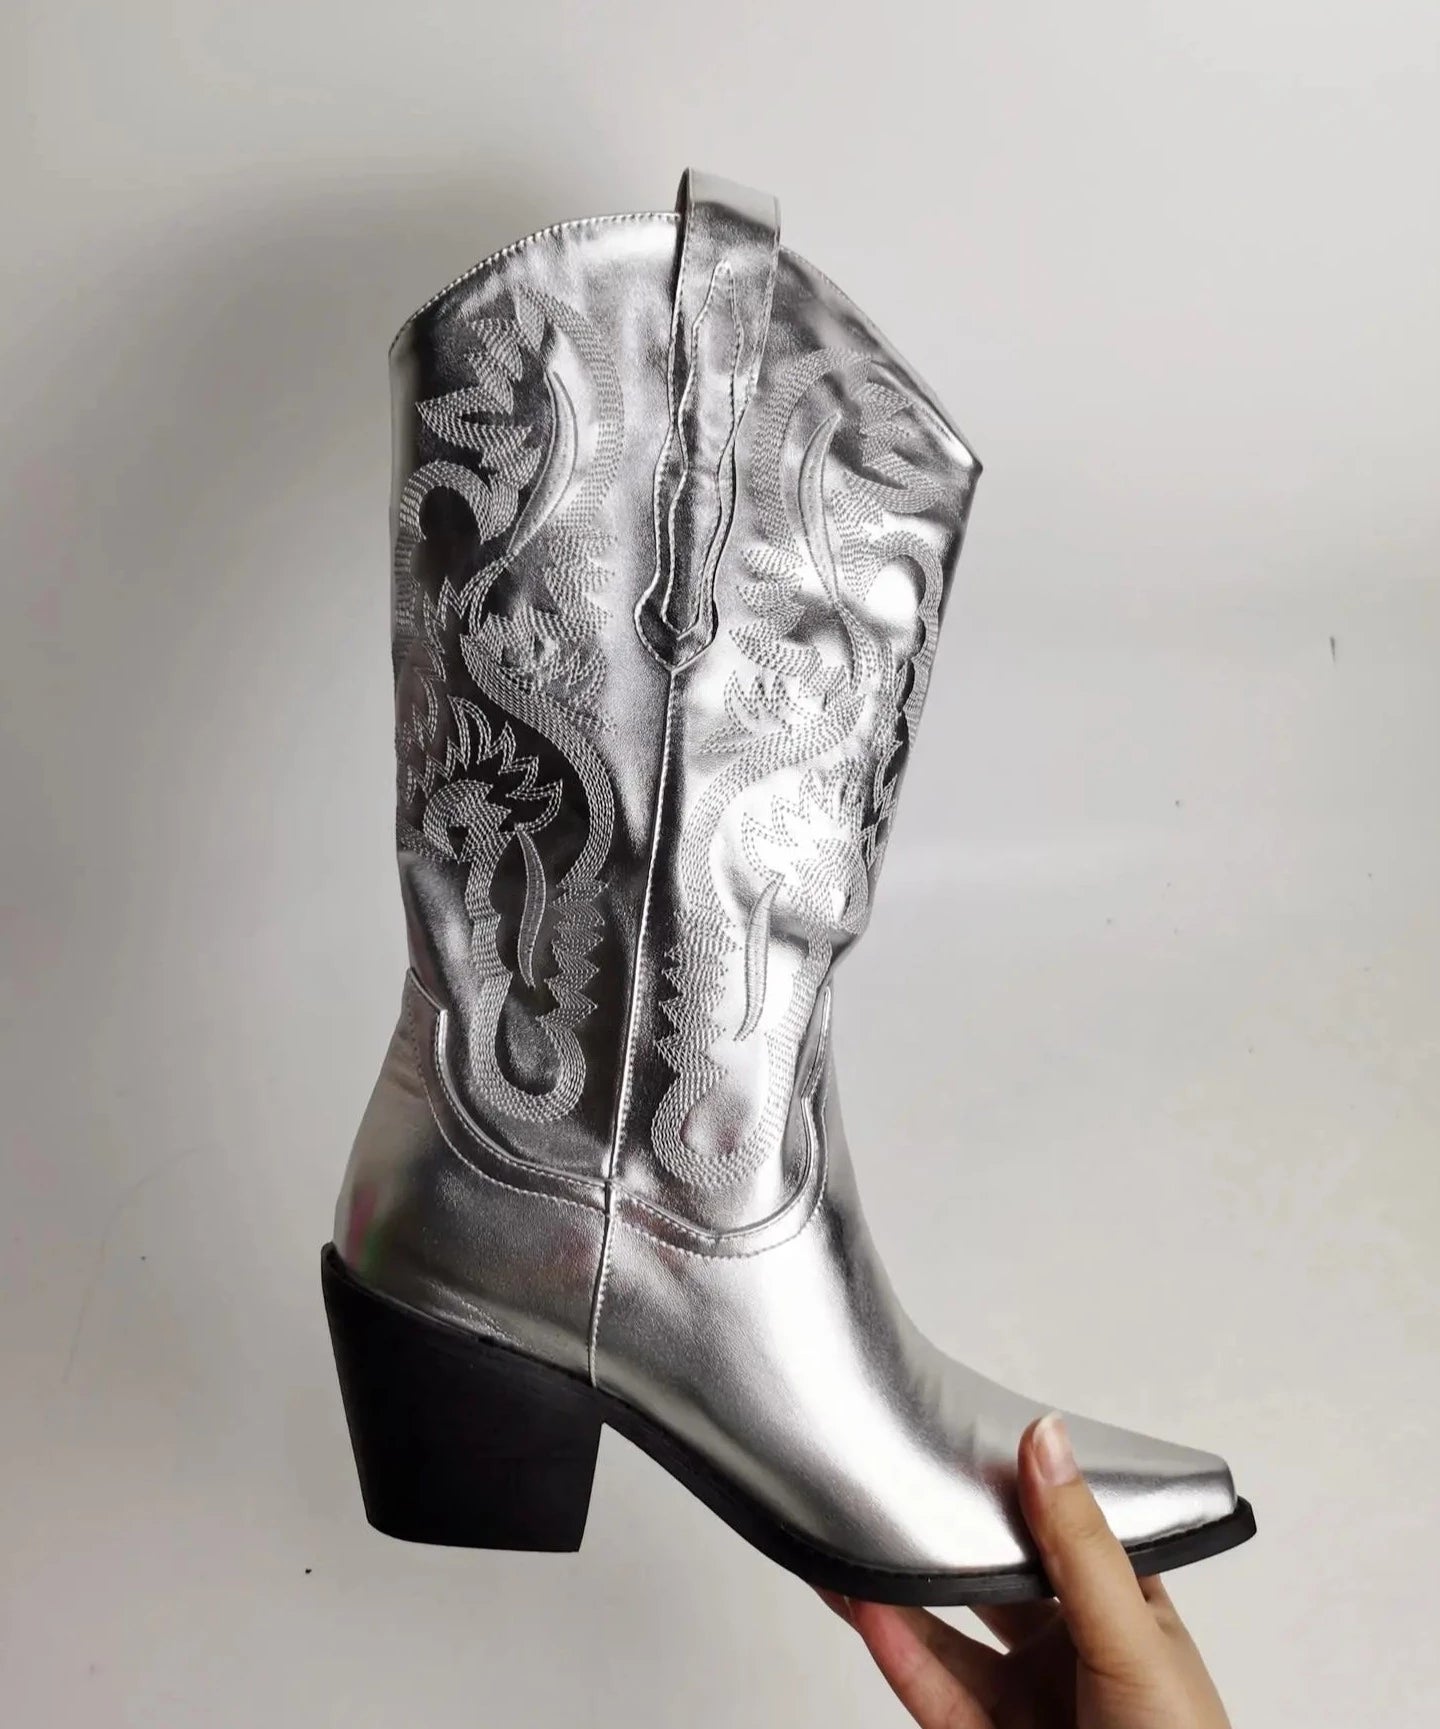 Metallic Silver Cowboy Boots at Mid Calf Length 